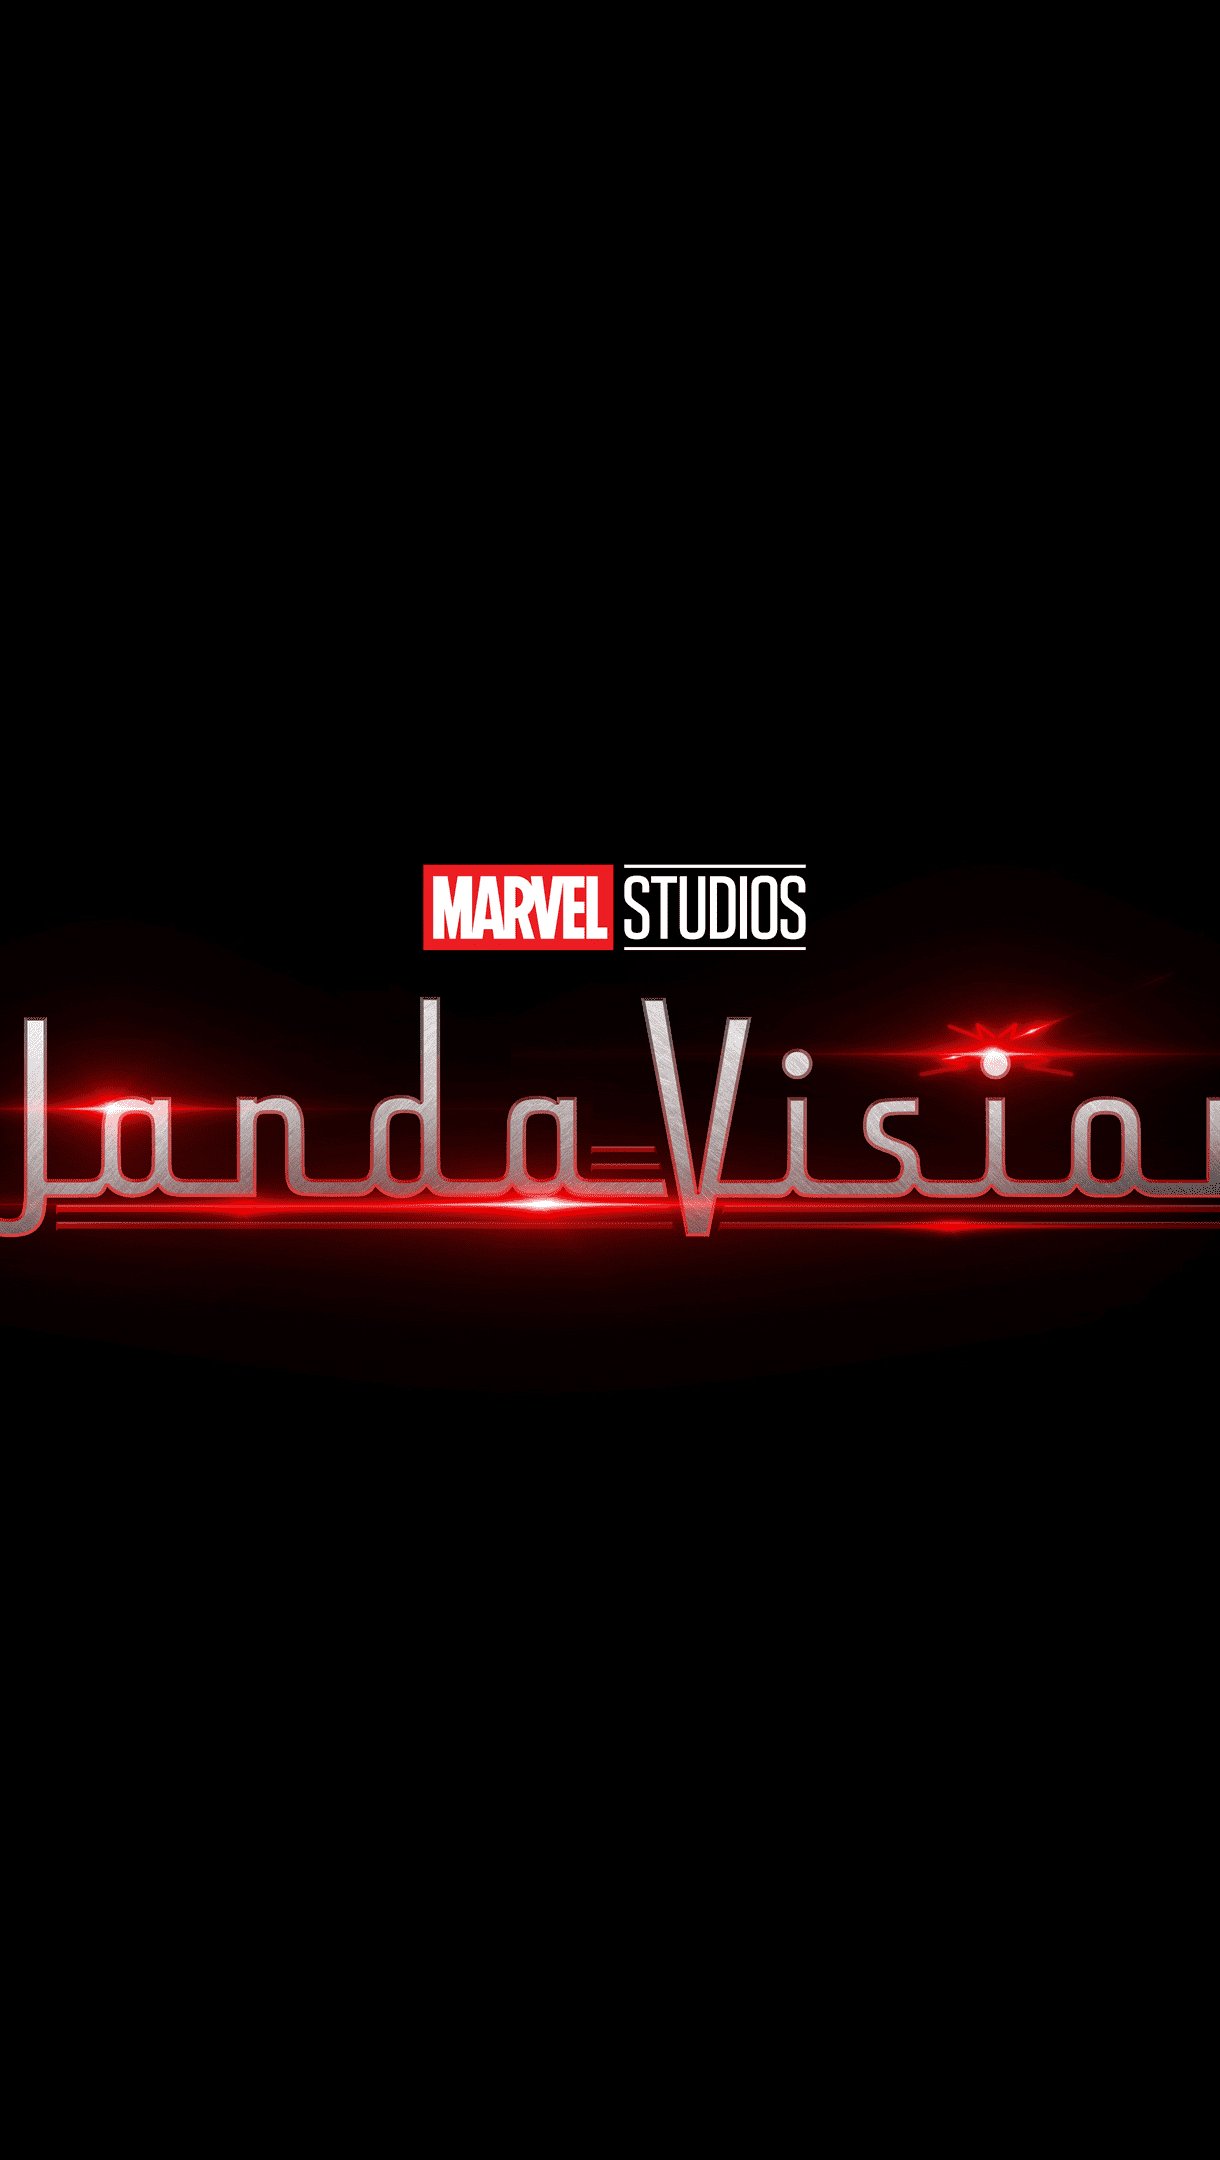 Marvel Studios WandaVision Wallpaper 4k Ultra HD